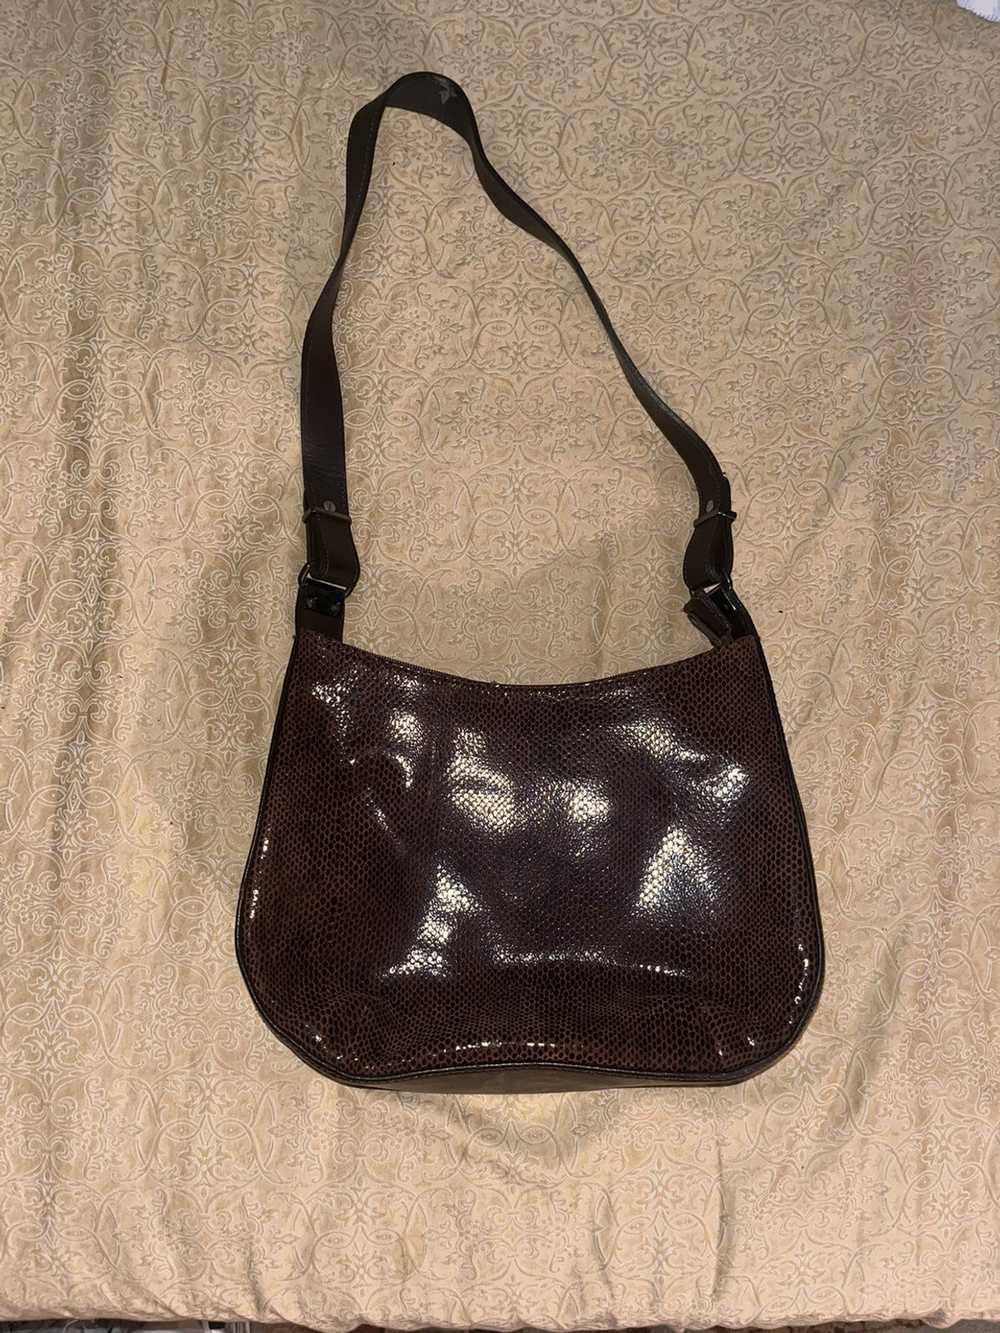 Vintage Vintage Snakeskin Handbag - image 2